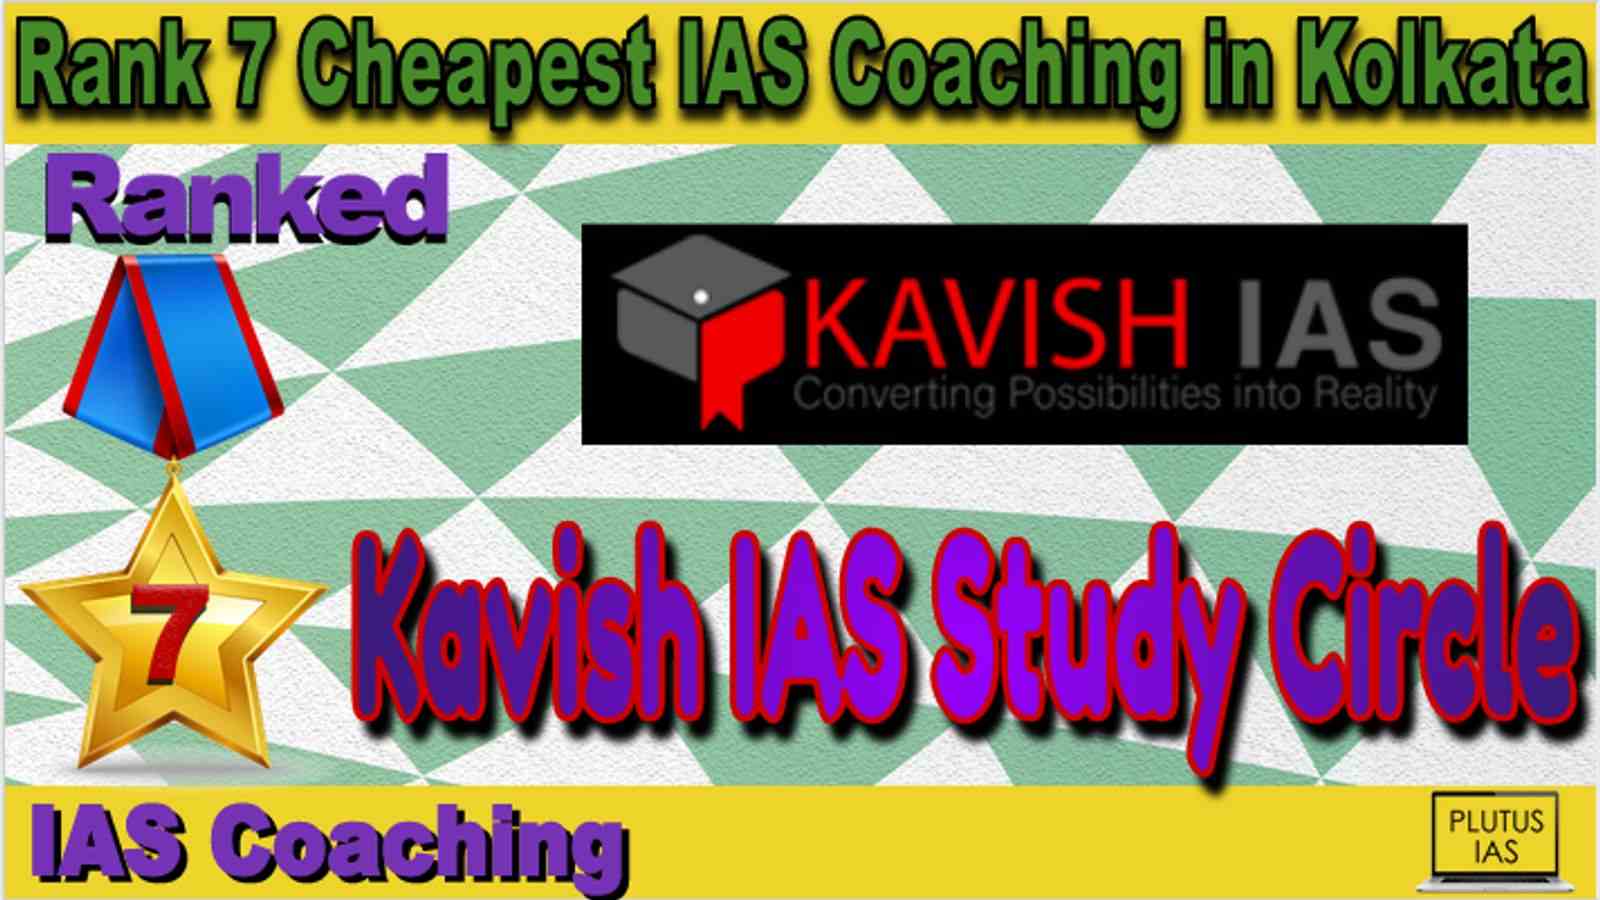 Rank 7 Cheapest IAS Coaching in Kolkata